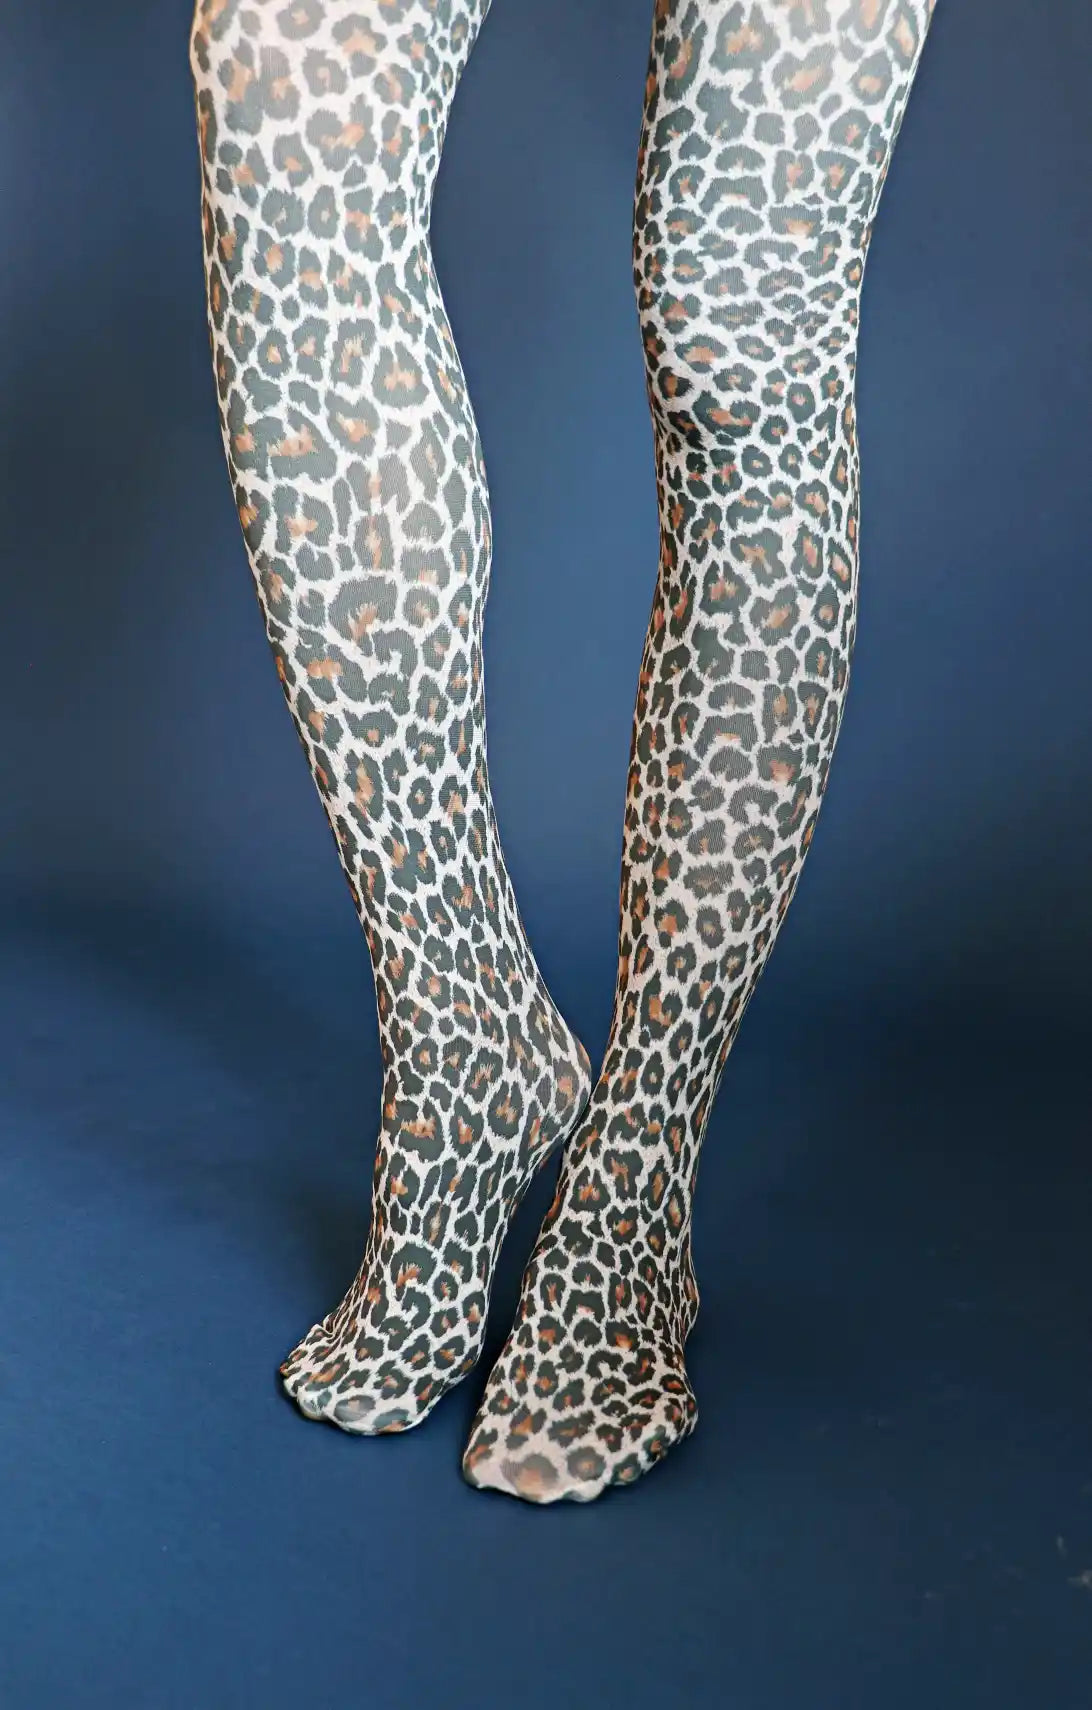 Leopard Animal Print Patterned Tights - Kiss Tights